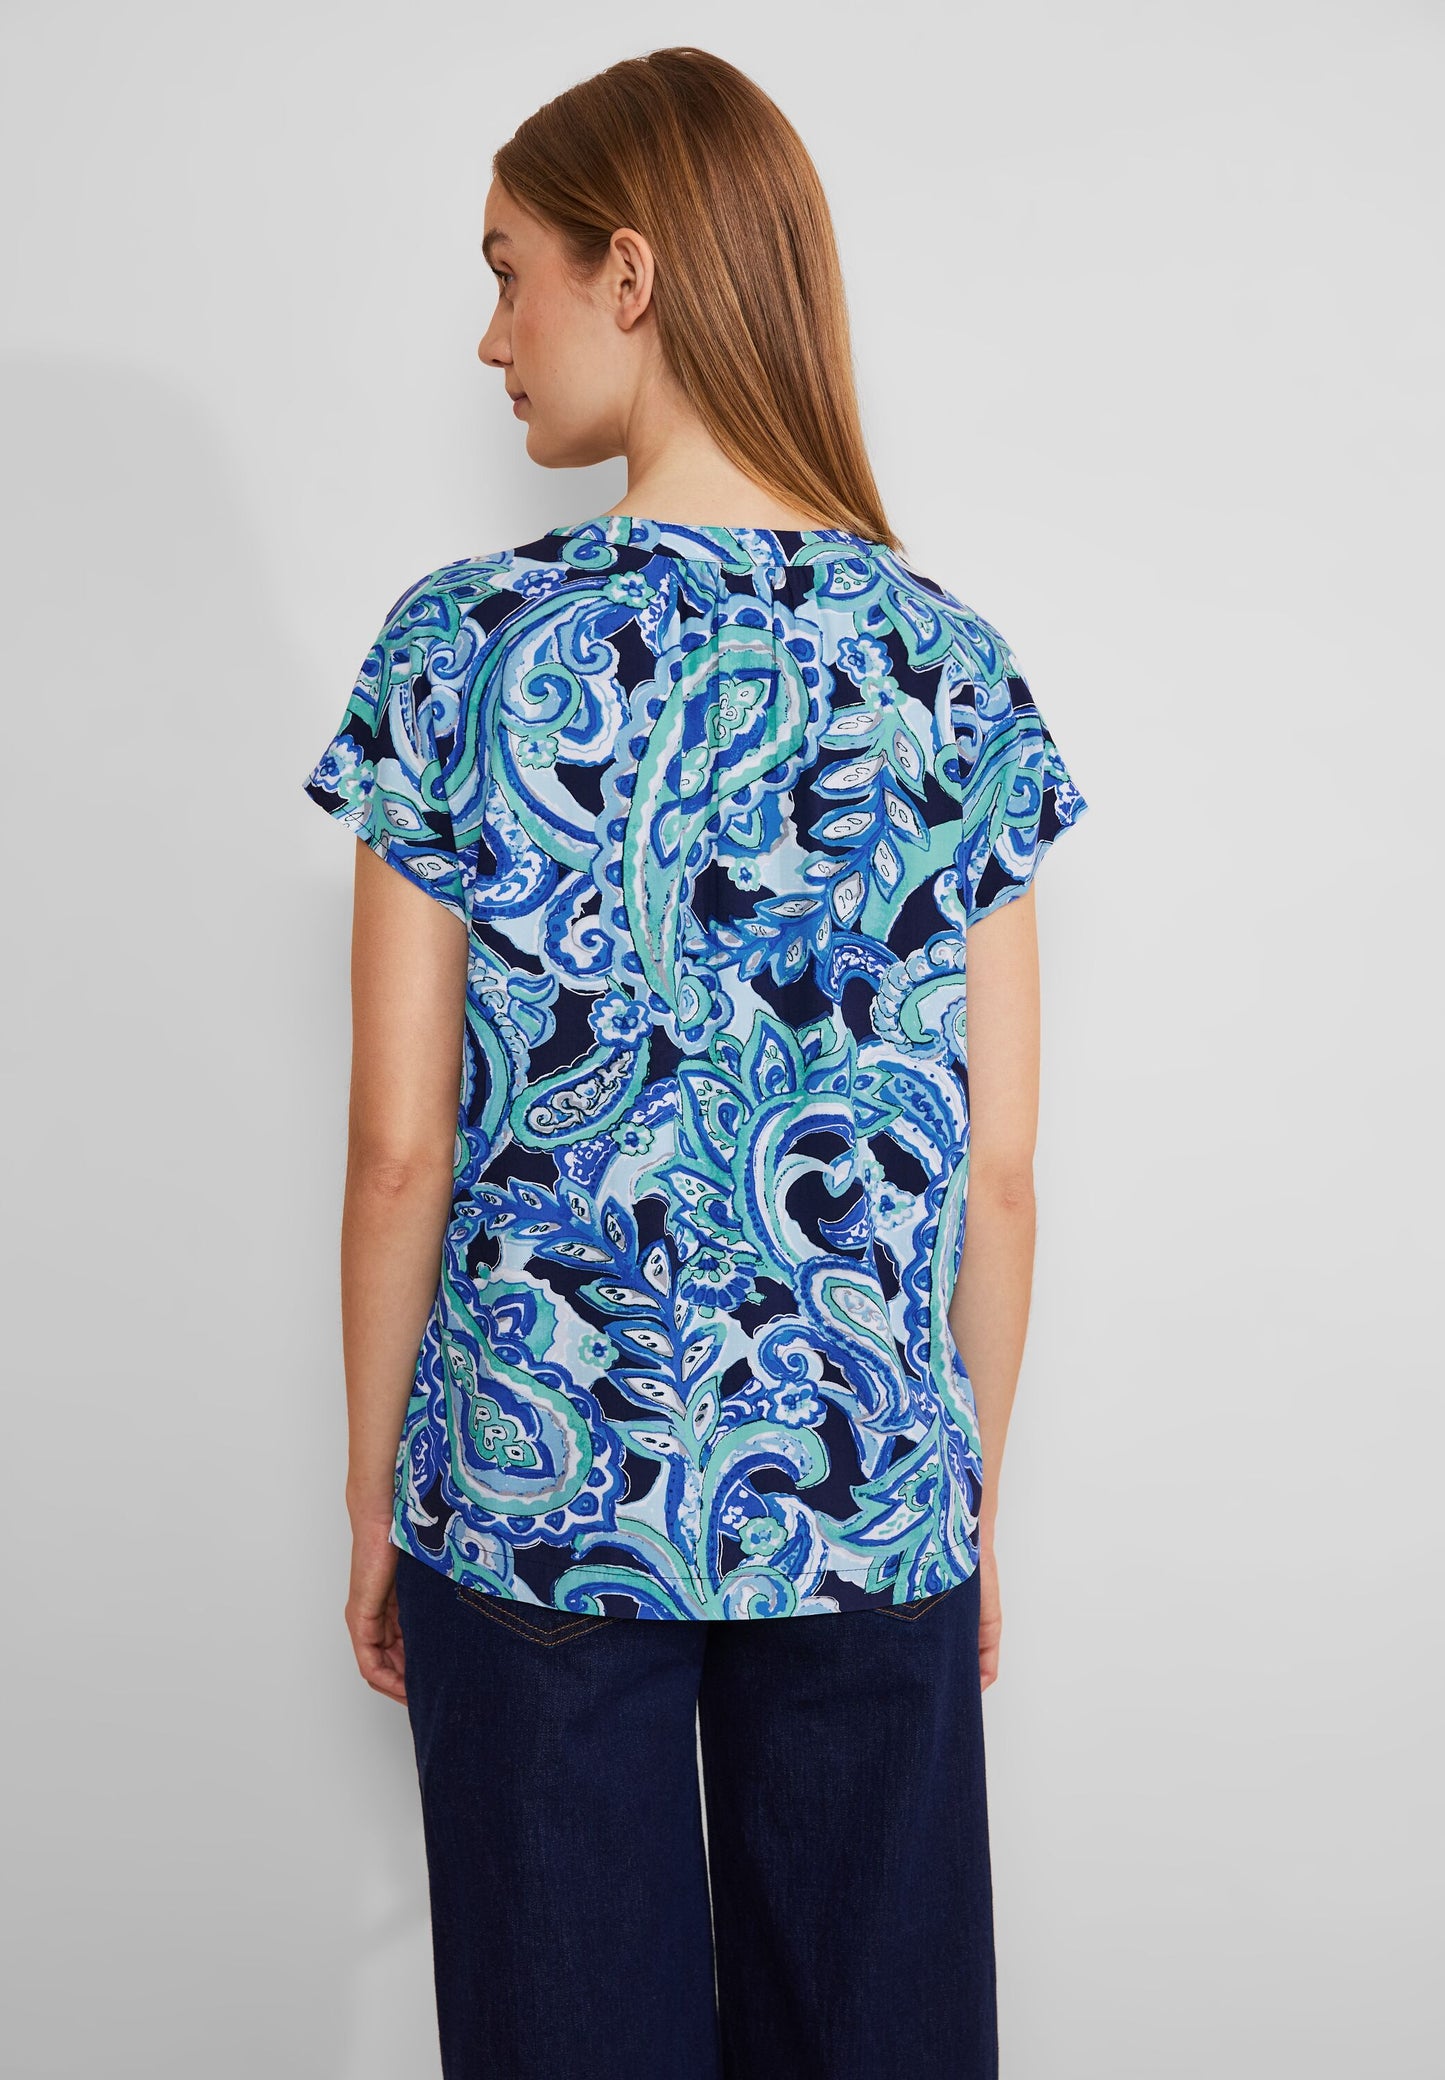 Street One - Blusen-Shirt mit Print - blau